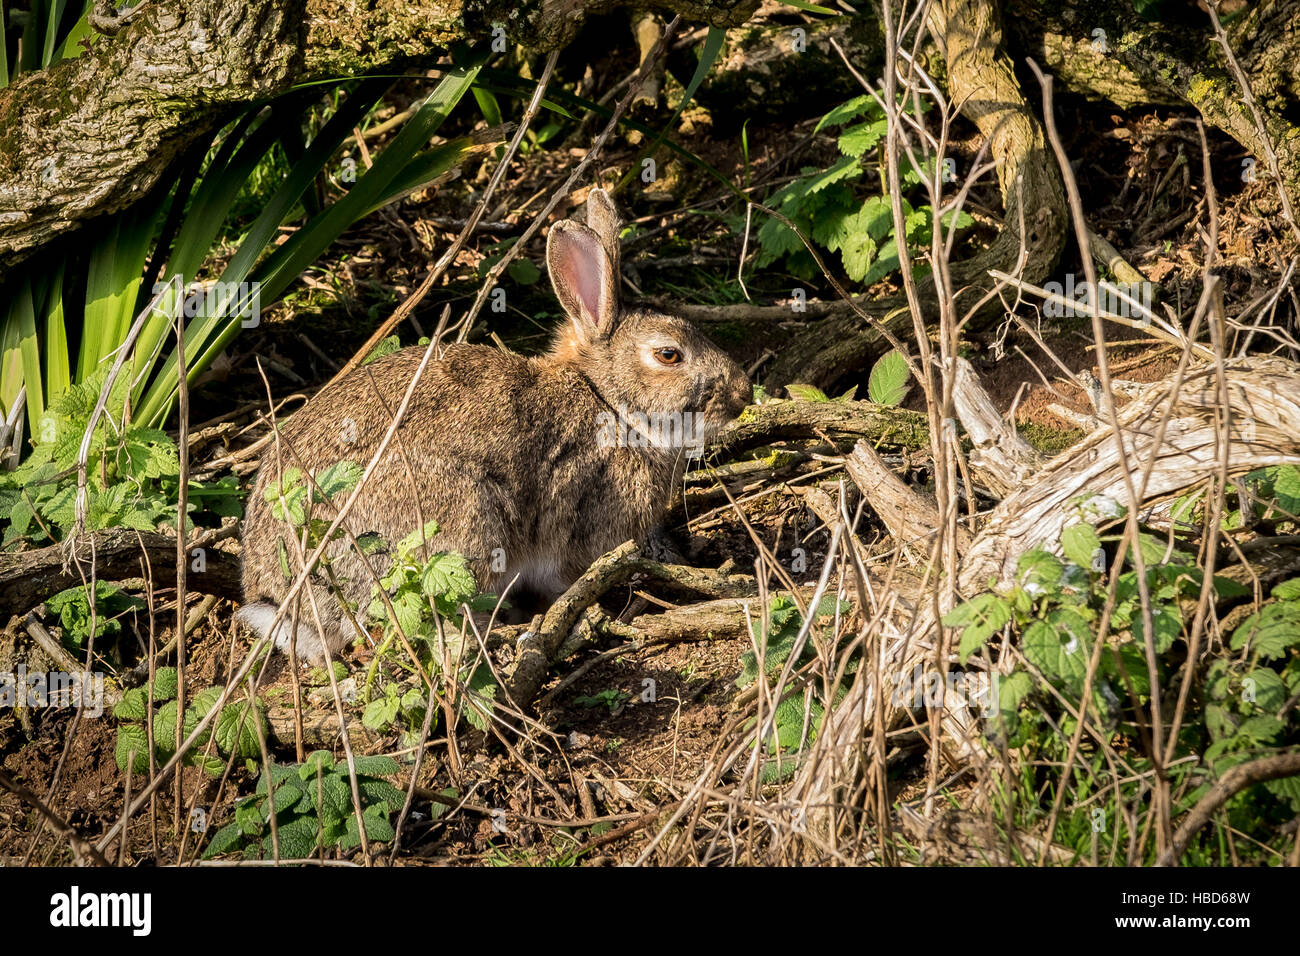 A wild rabbit hiding amongst vegetation.  Orytolagus cuniculus. Stock Photo